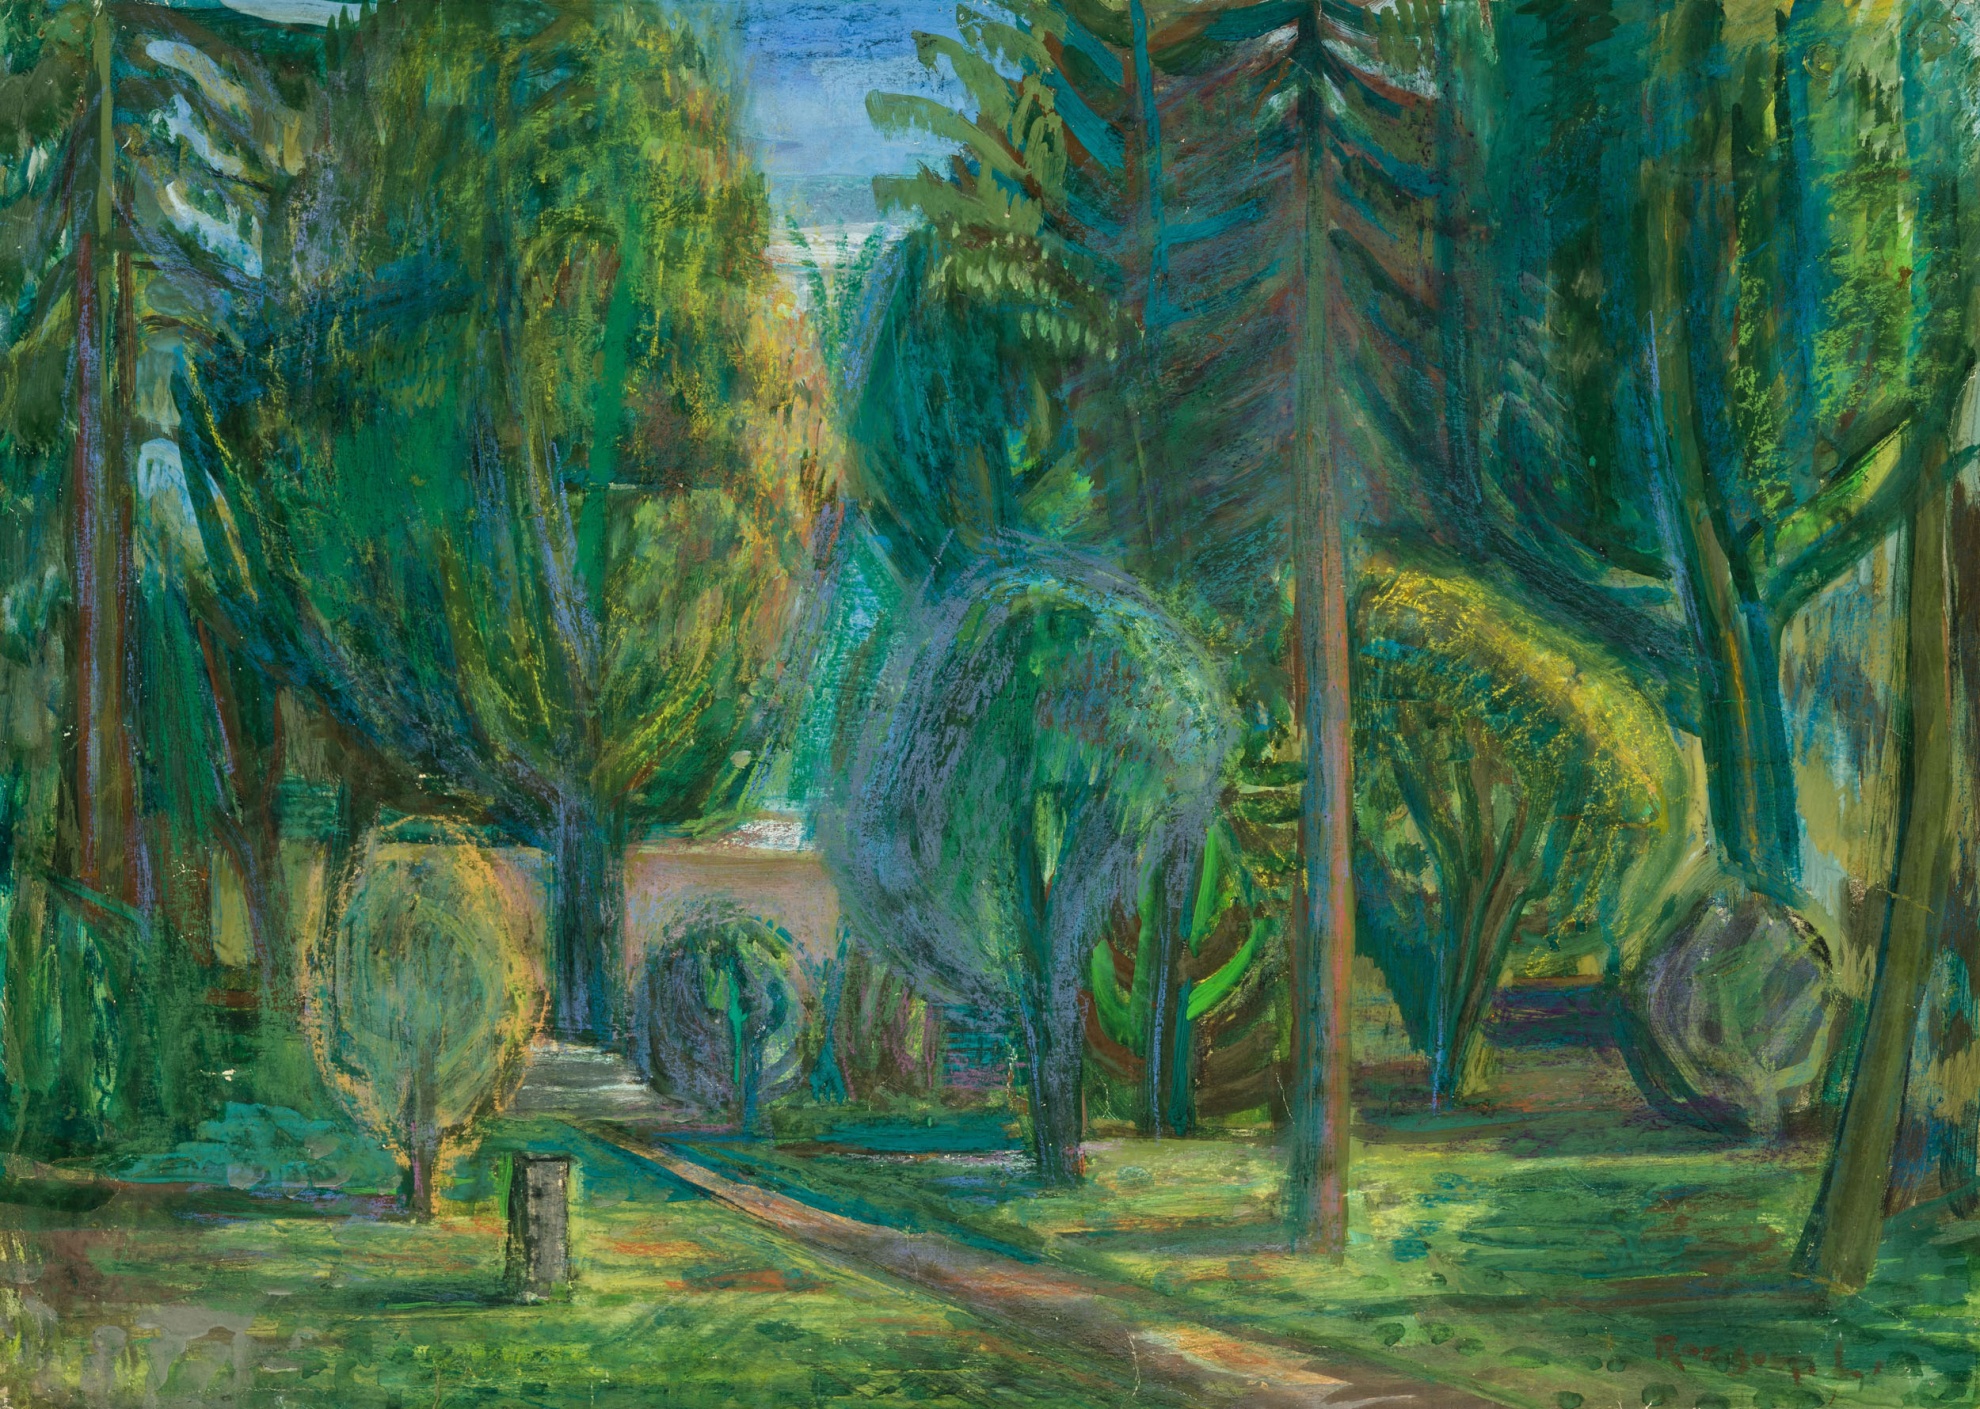 Fény zöld törzsek között (Light between green trunks), n.d. (ca. 1940-42)
(The Salgo Trust for Education CC BY-NC-SA)